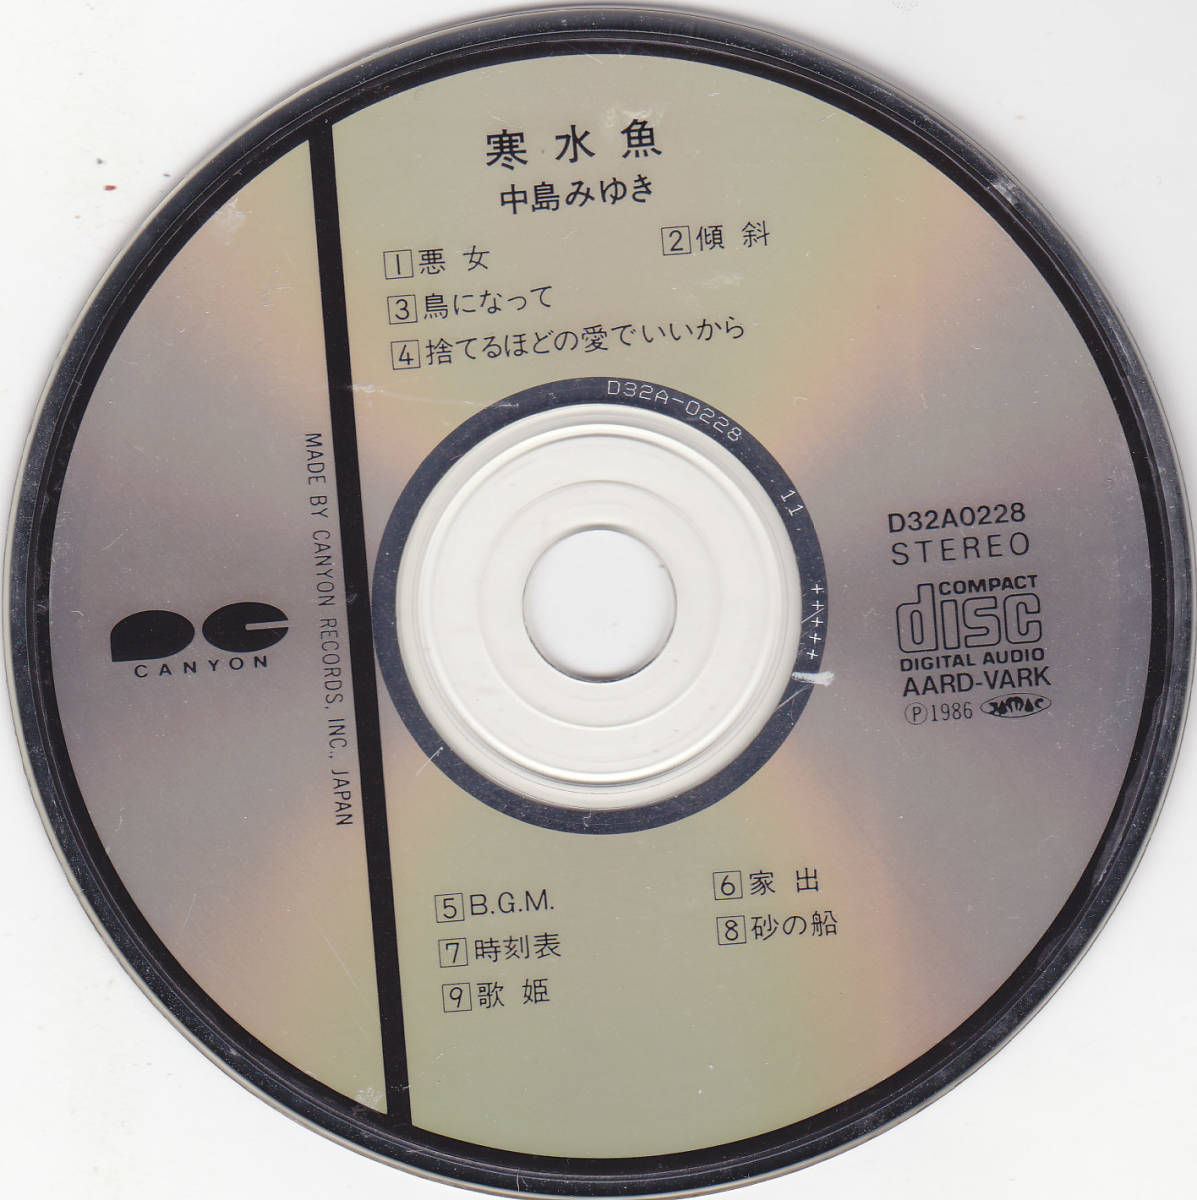 CD 中島みゆき - 寒水魚 - 旧規格 D32A-0228 11 3200円盤 税表記なし 折込帯付き 巻込帯_画像3